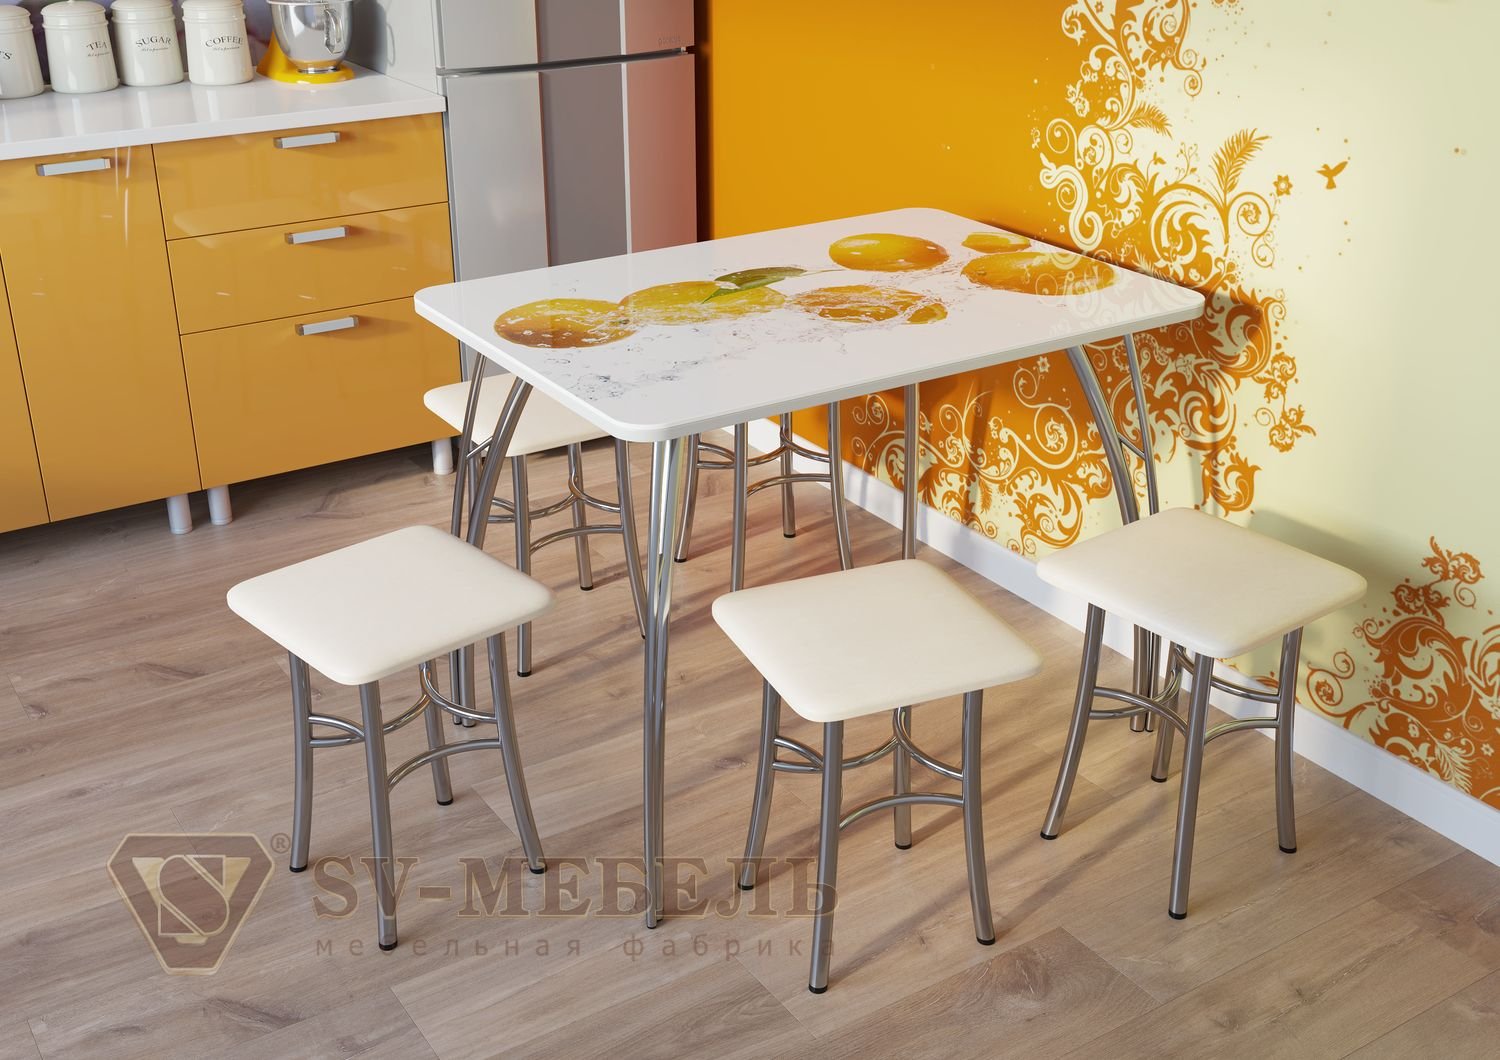 Кухонные столы барнаул. Стол кухонный Альберто Белло. Кухонный стол и стулья. Кухонный стол с табуретками. Небольшой кухонный стол.